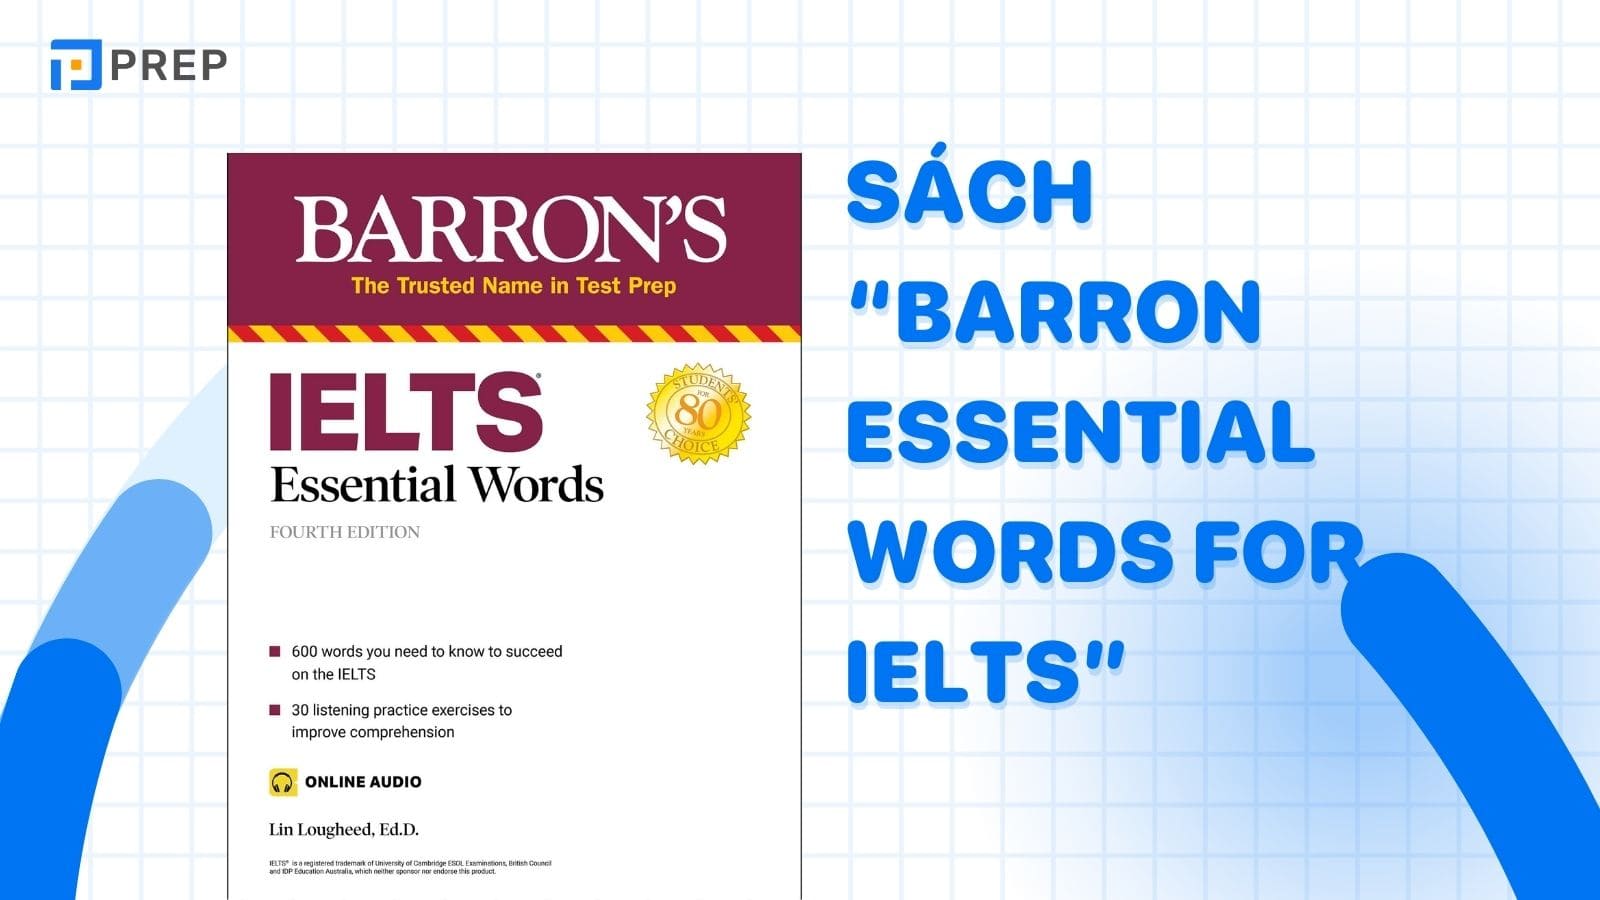 barron-essential-words-for-ielts.jpg